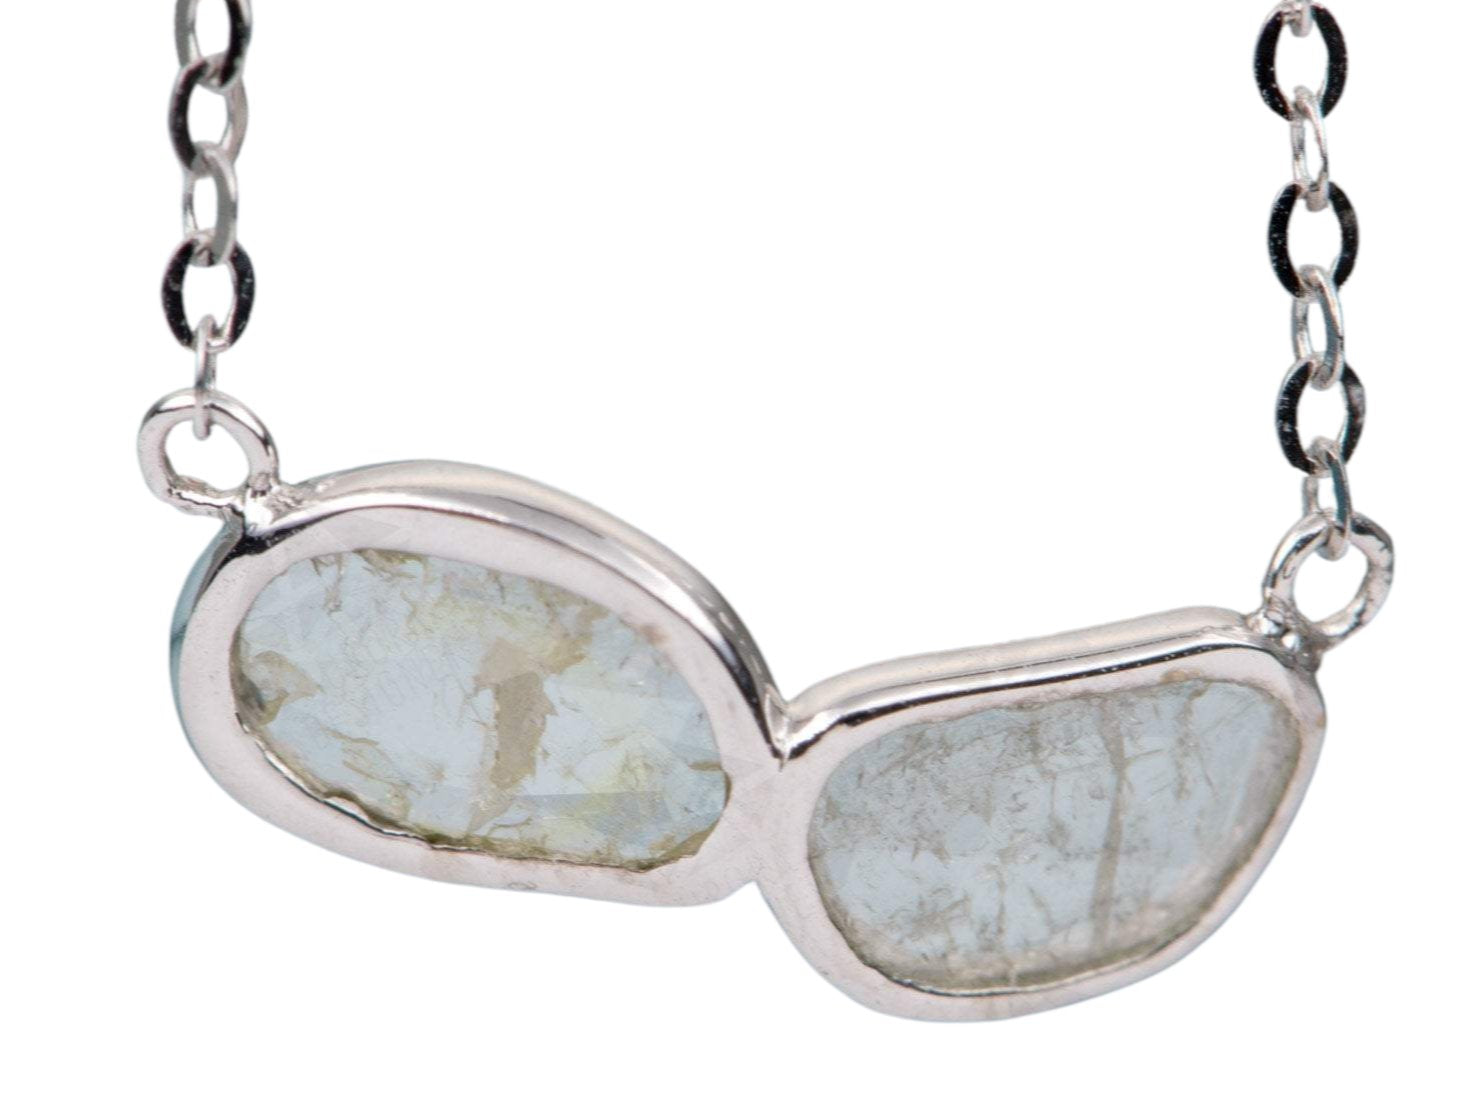 White & Pink ADNS1116 American Diamond Necklace Set, Size: Adjustable